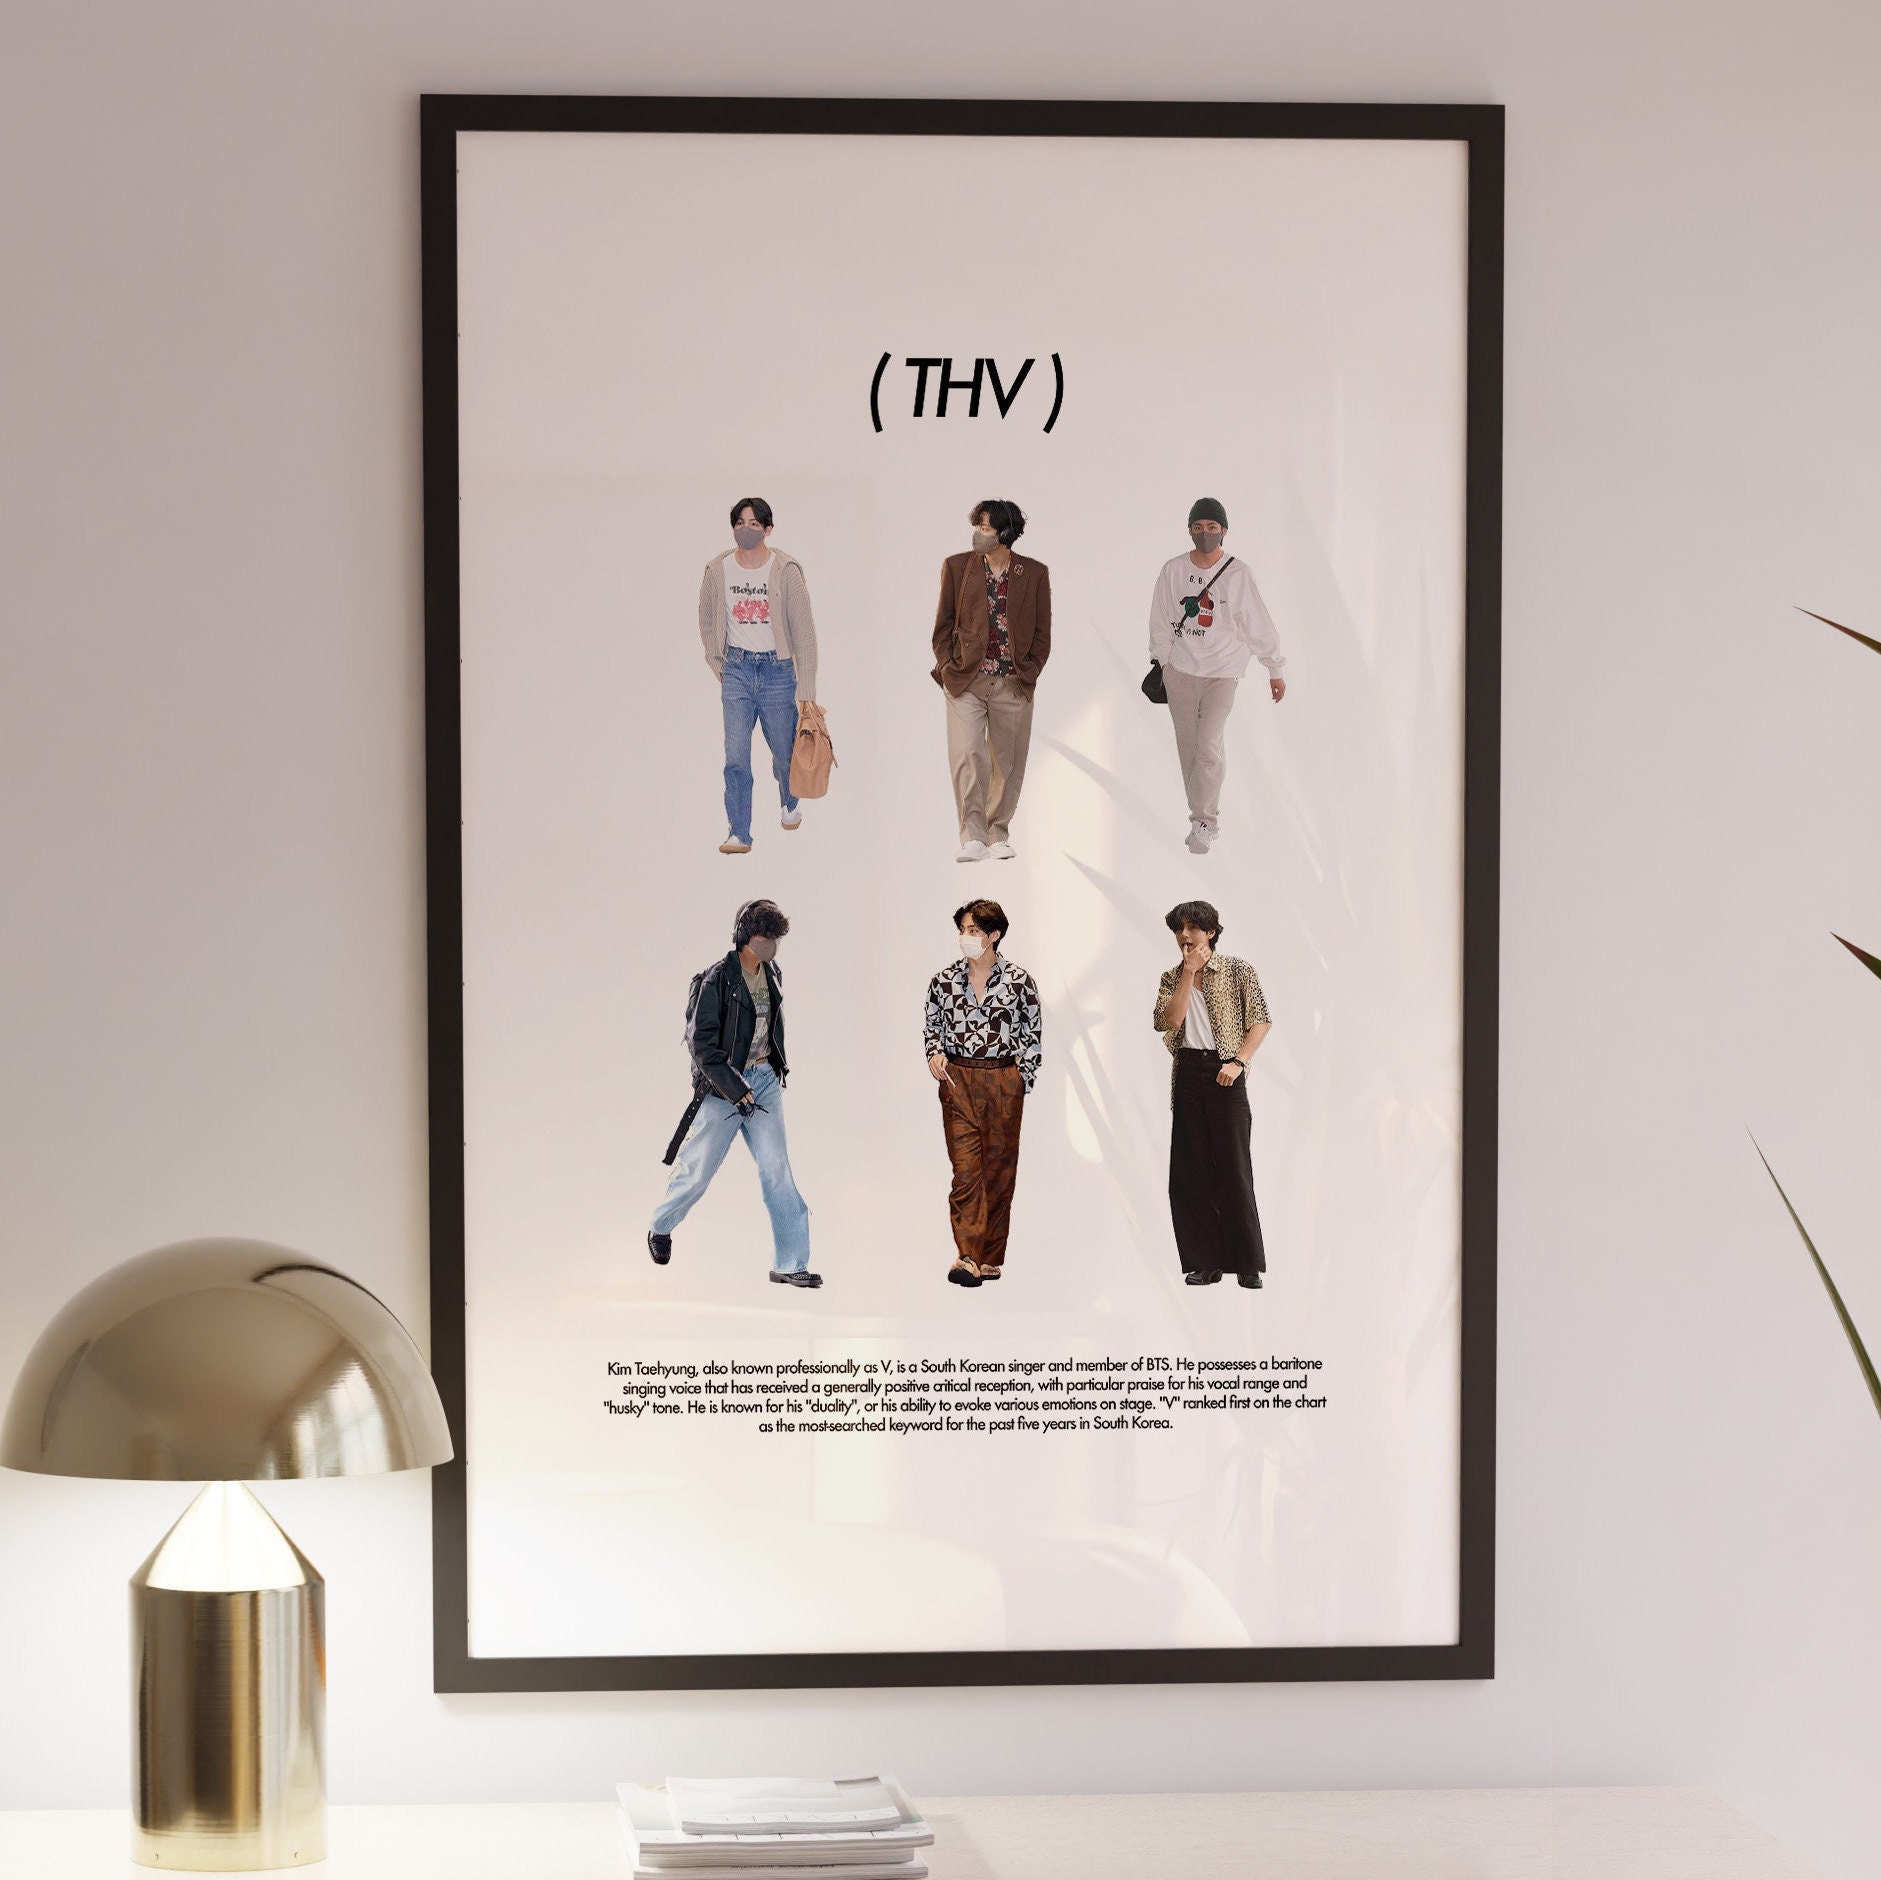 Kim Taehyung/V airport fashion bts line art Tote Bag for Sale by